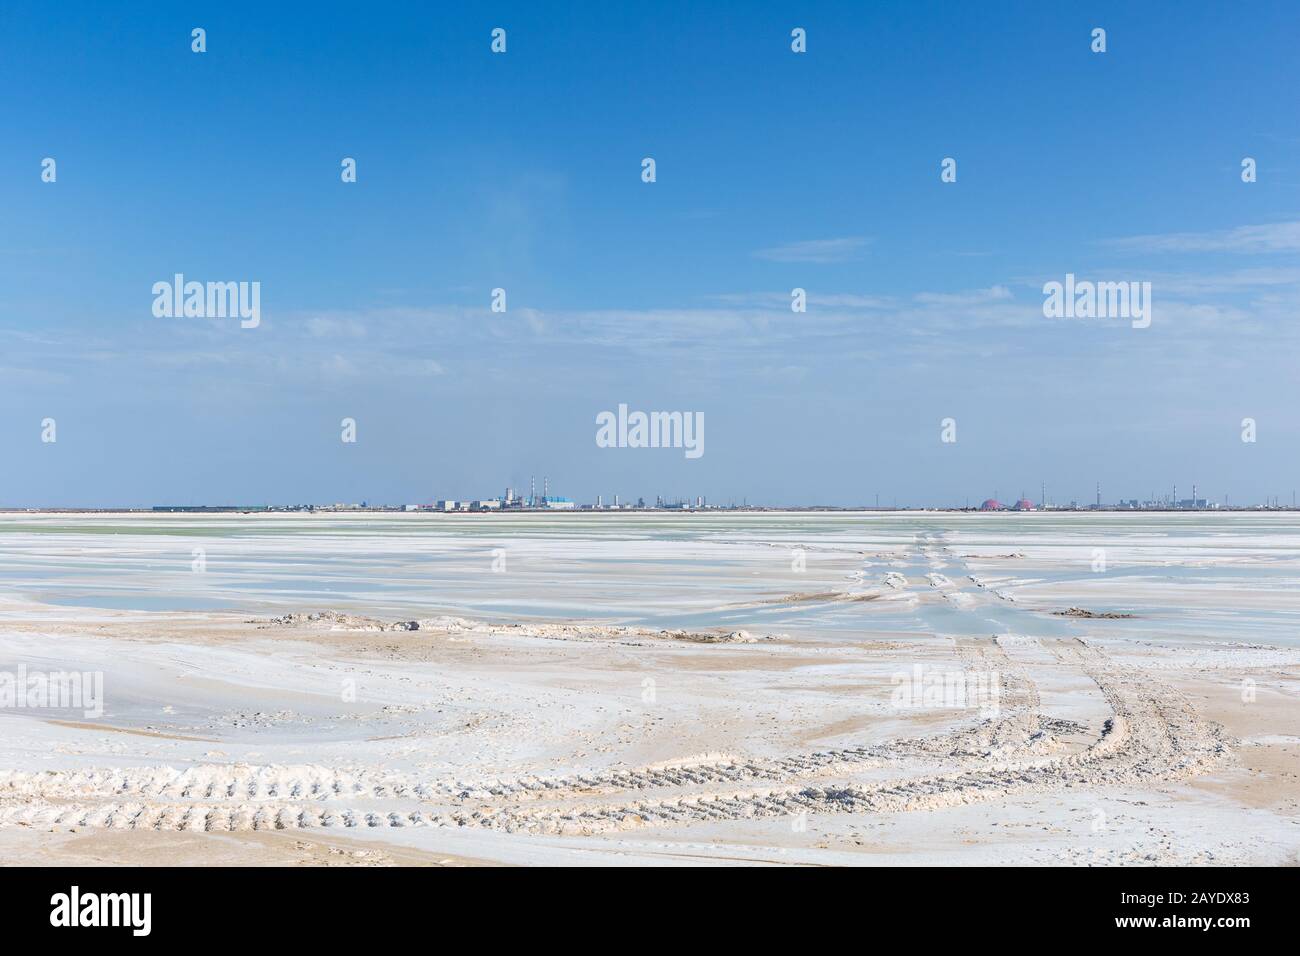 qarhan salt lake industrial landscape Stock Photo